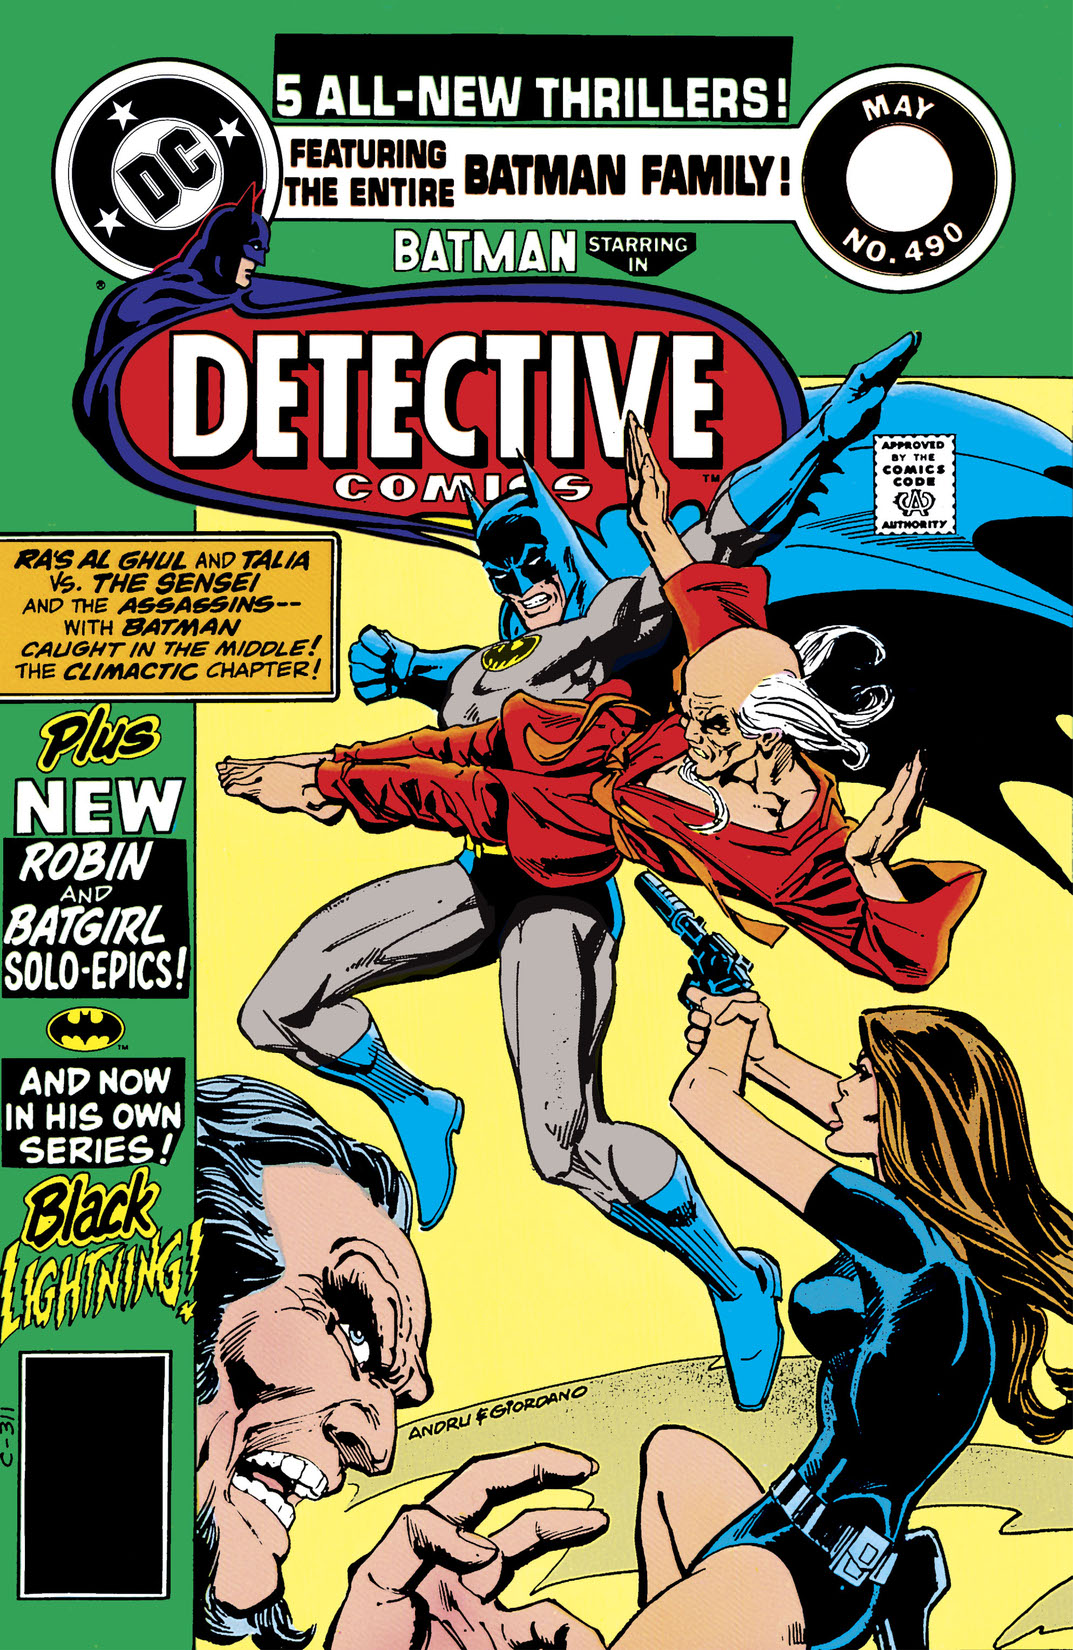 Detective Comics (1937-) #490 preview images